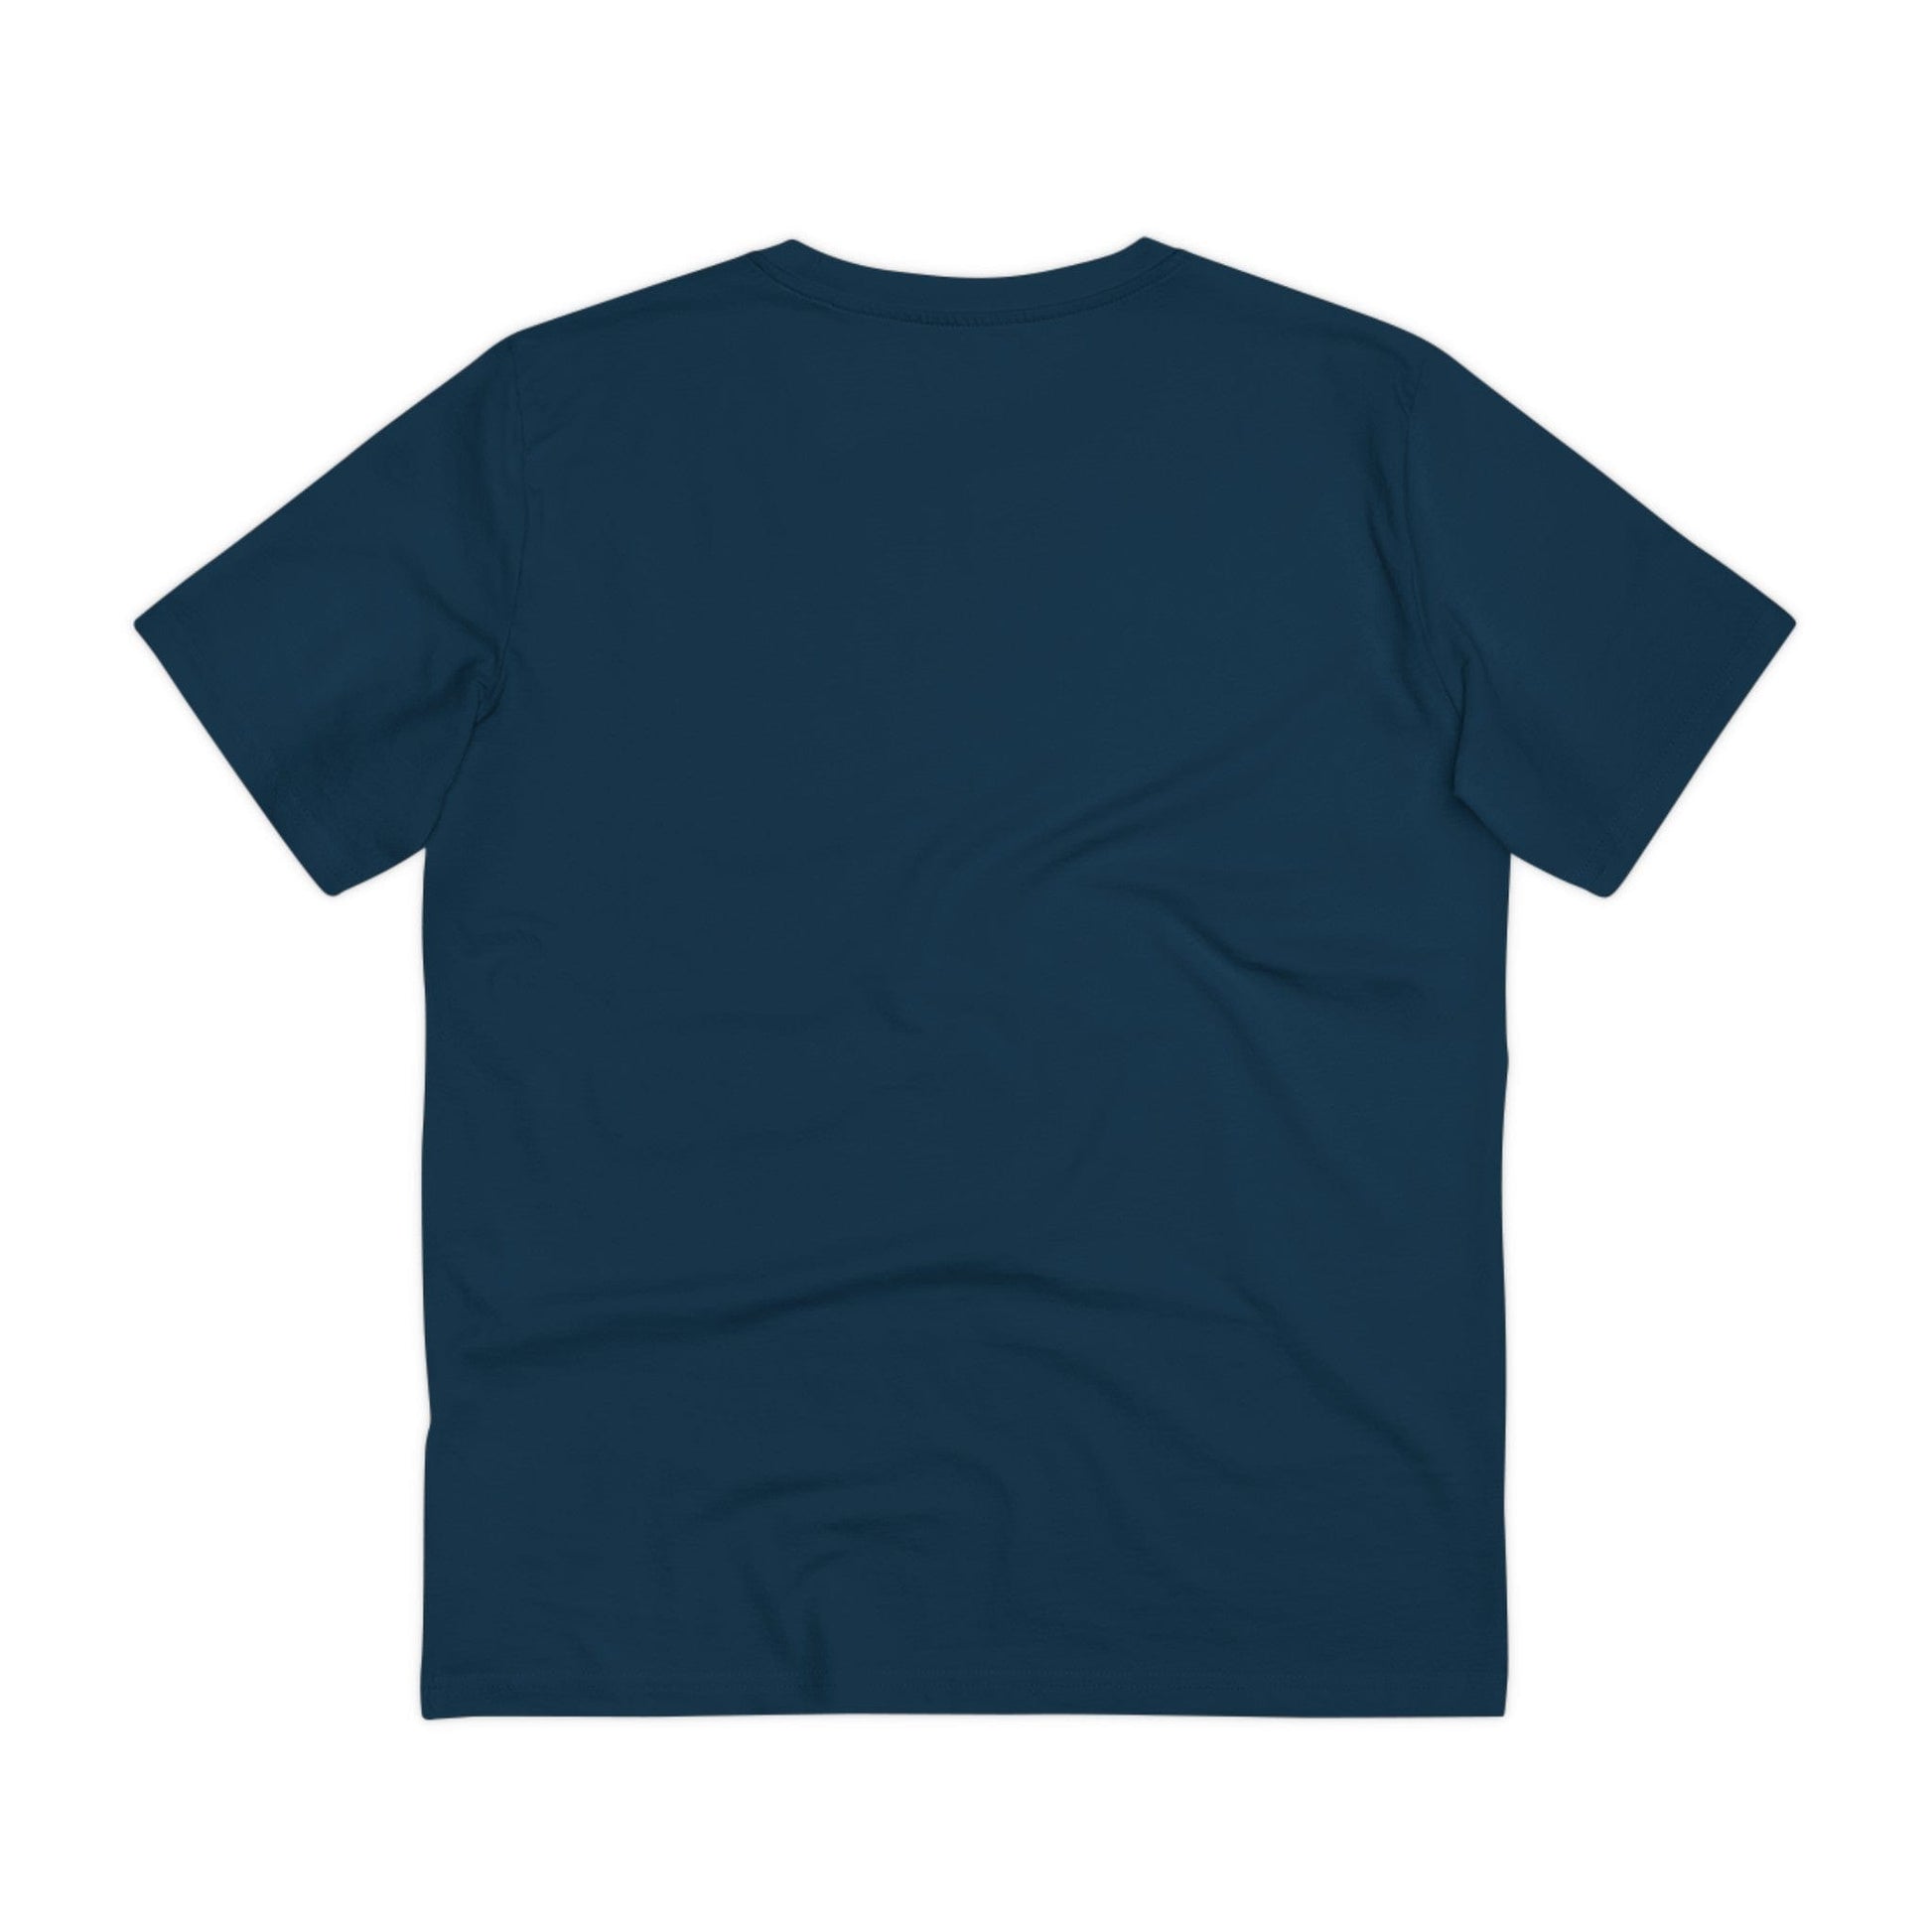 Printify T-Shirt Taurus - Colorful Zodiac - Front Design